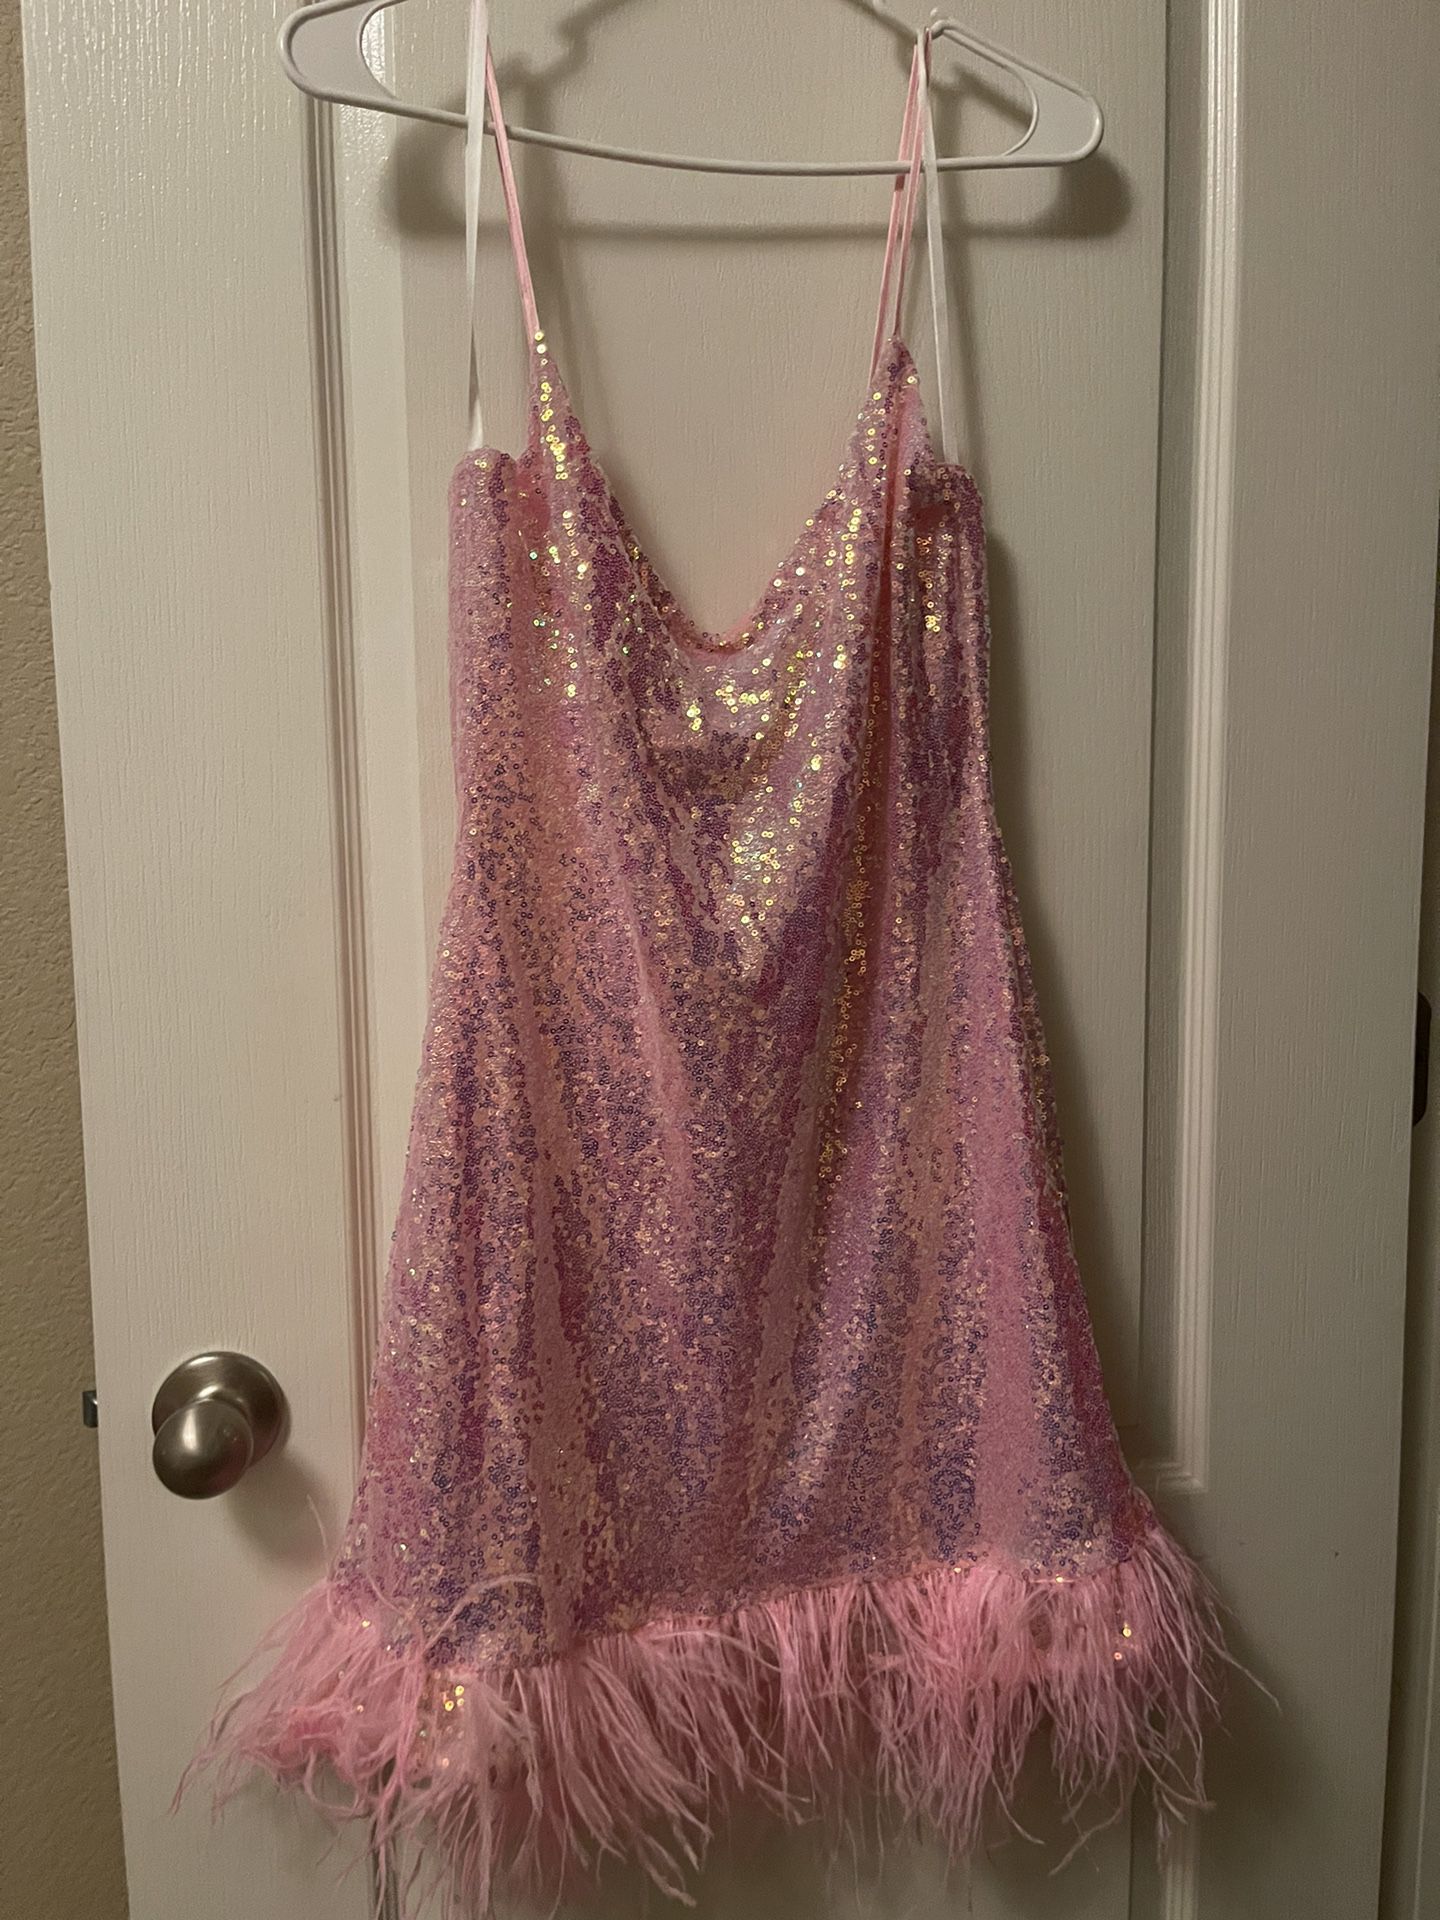 Sequin dress, pink